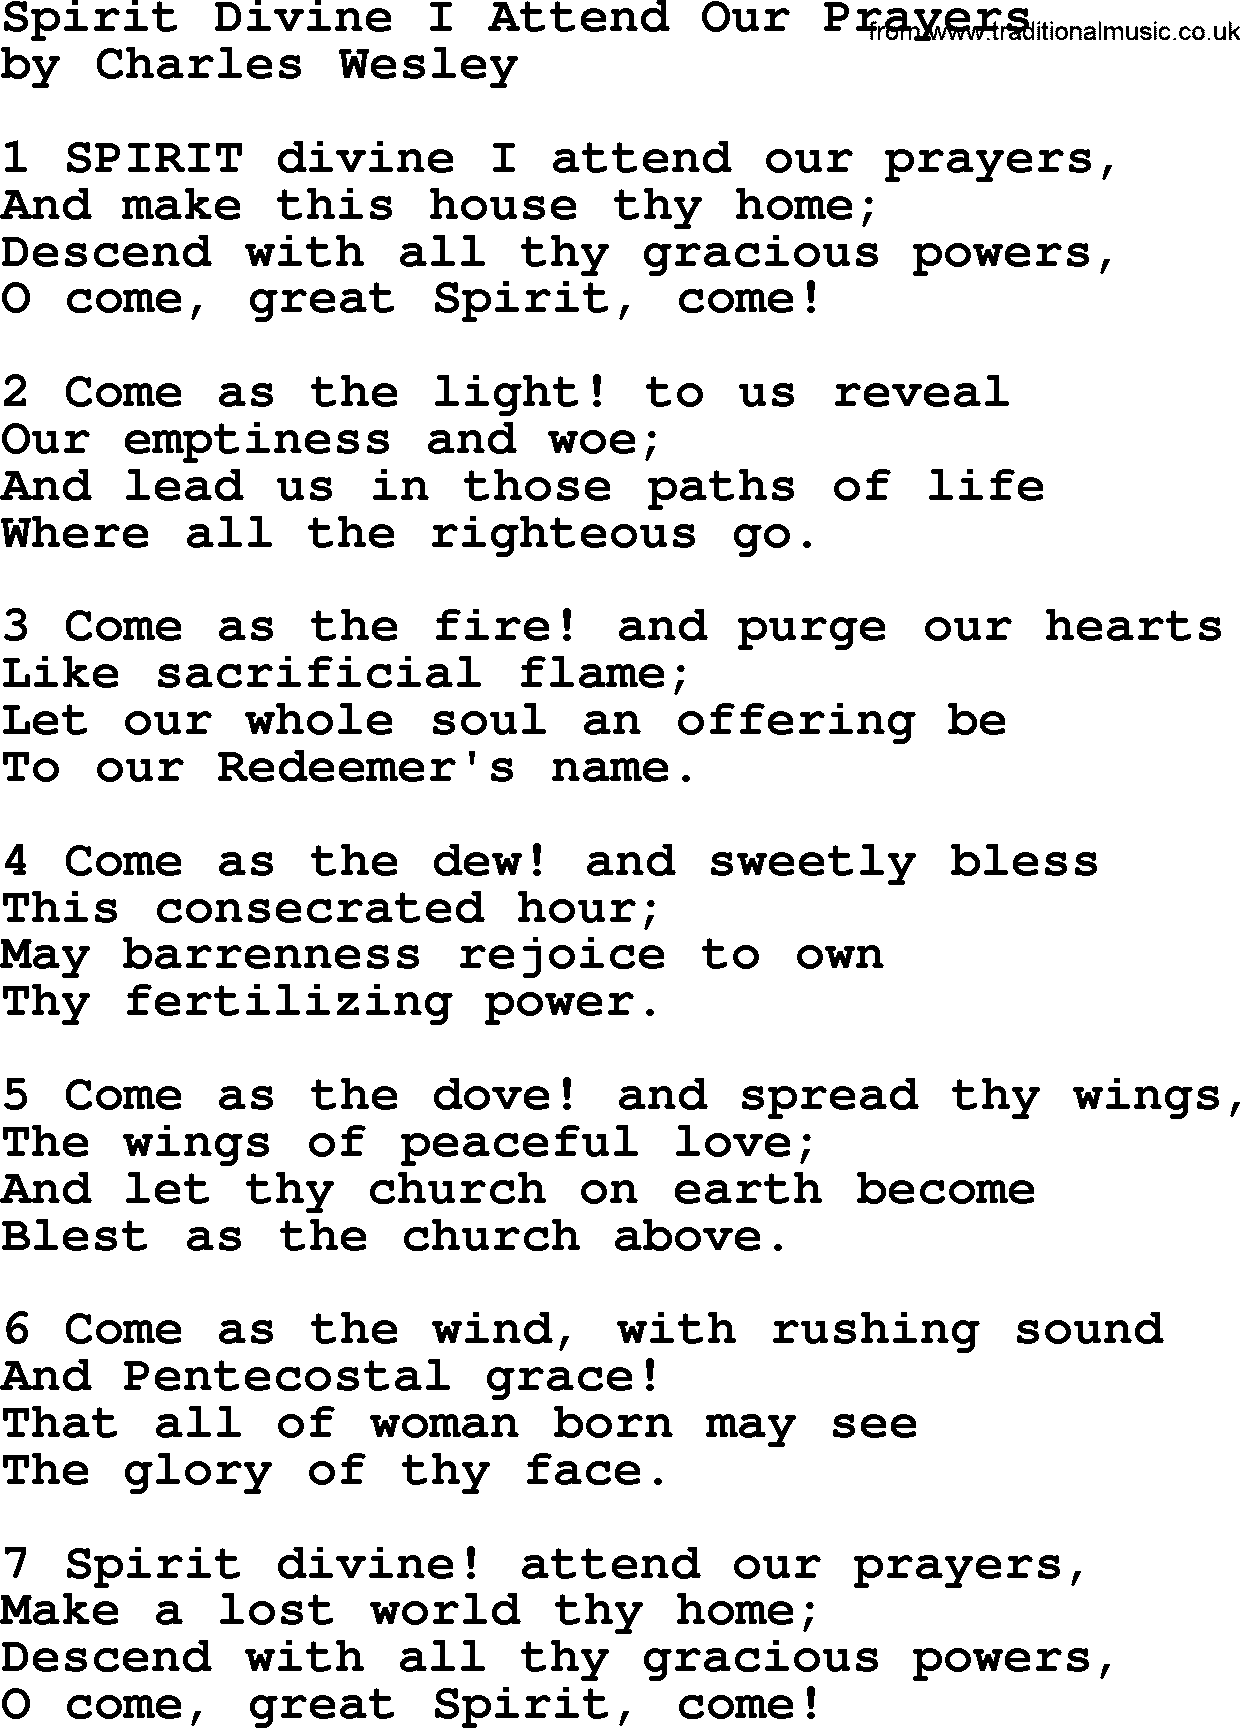 Charles Wesley hymn: Spirit Divine I Attend Our Prayers, lyrics